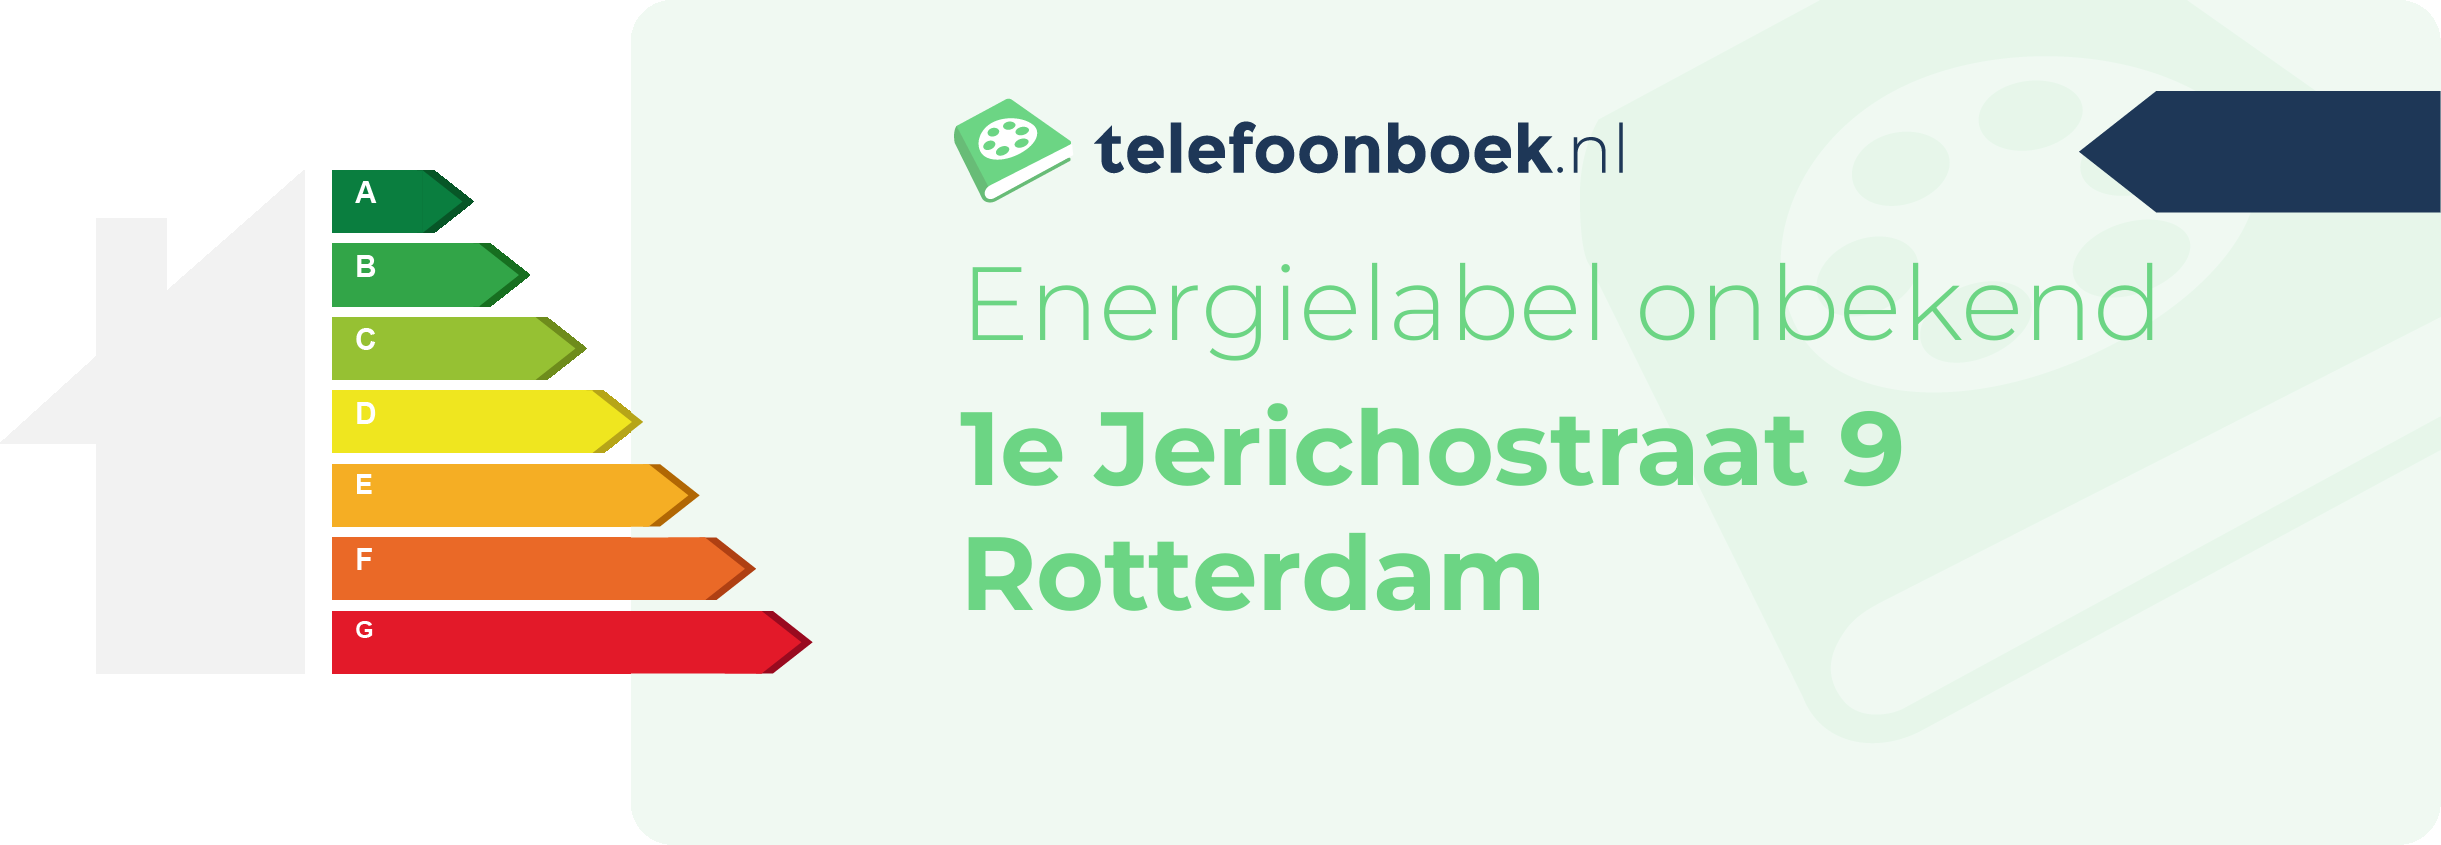 Energielabel 1e Jerichostraat 9 Rotterdam